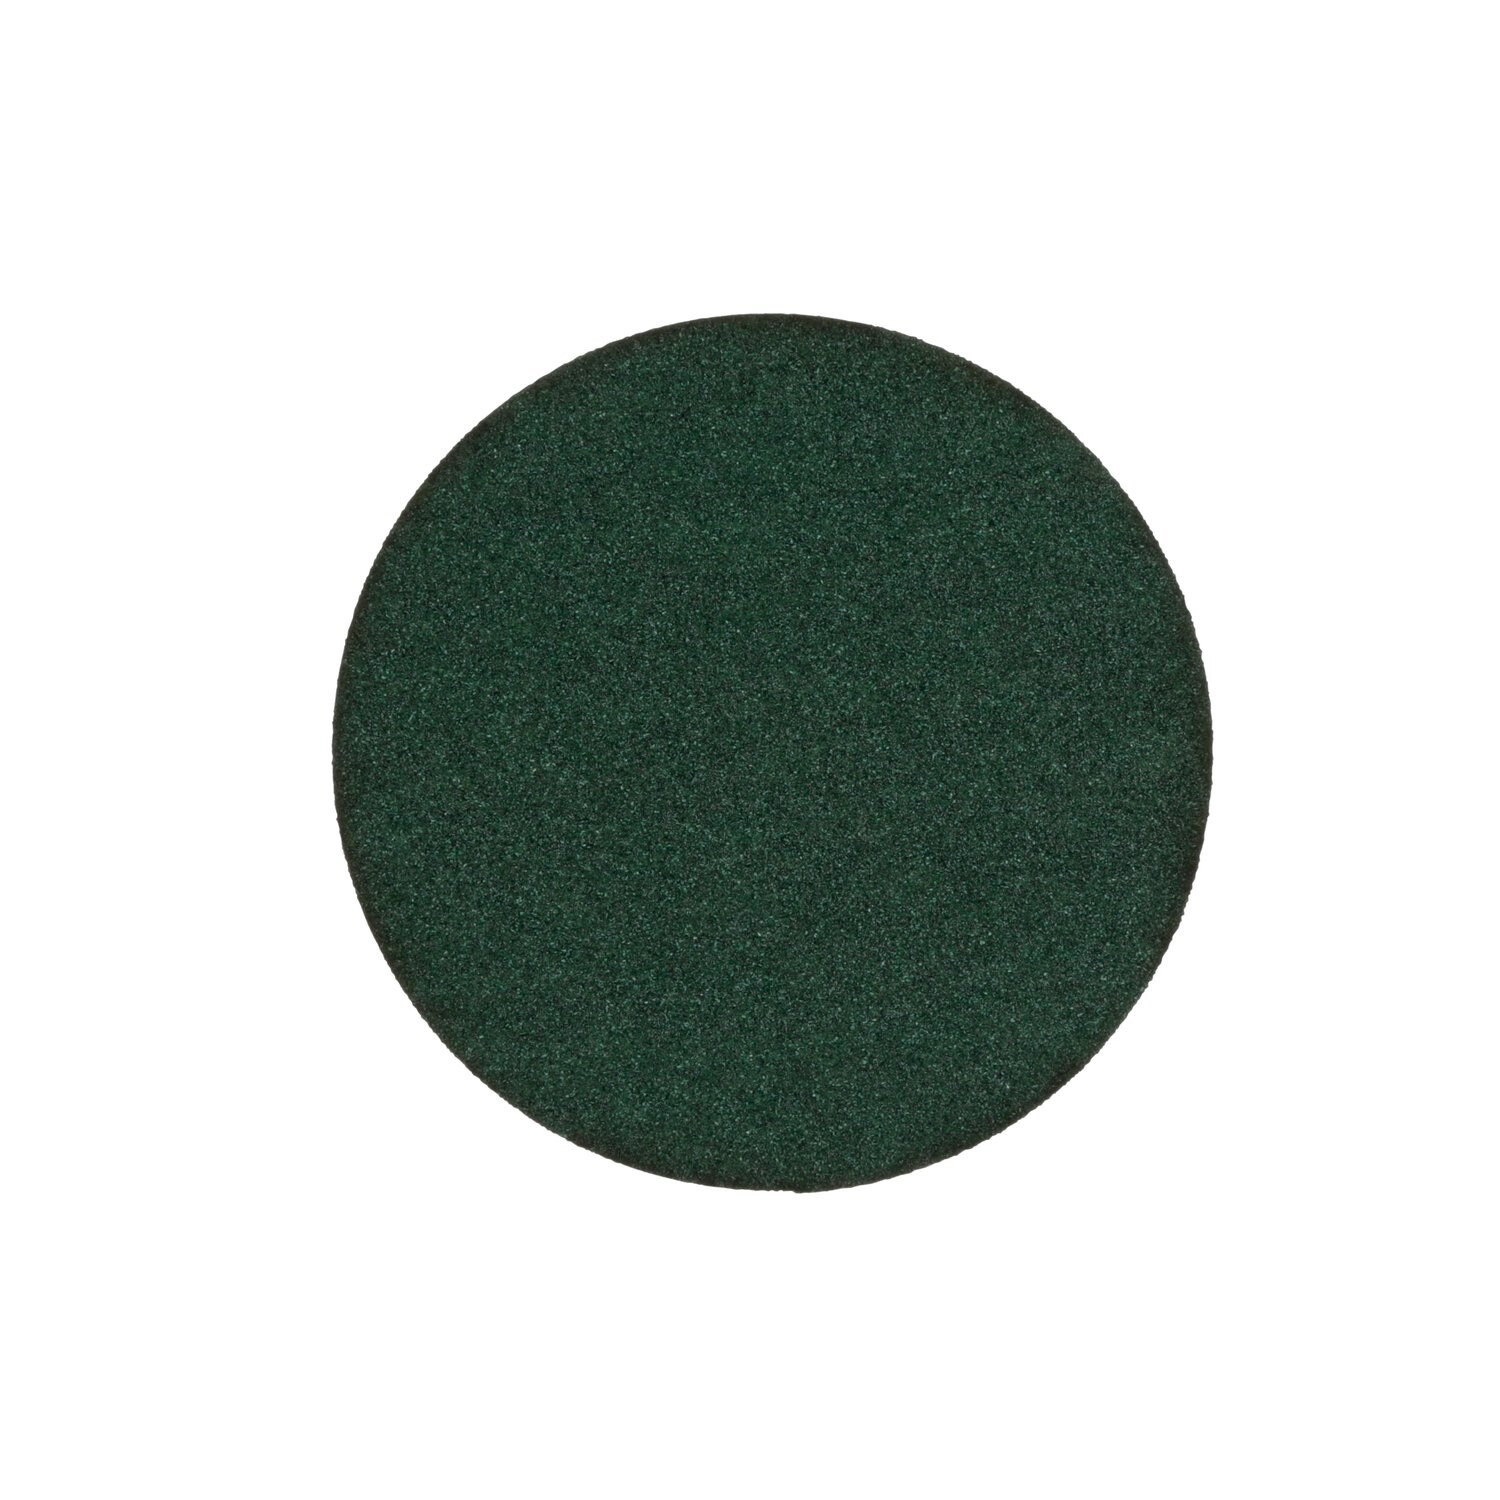 7000120341 - 3M Green Corps Hookit Disc, 00512, 6 in, 80, 25 discs per carton, 5
cartons per case